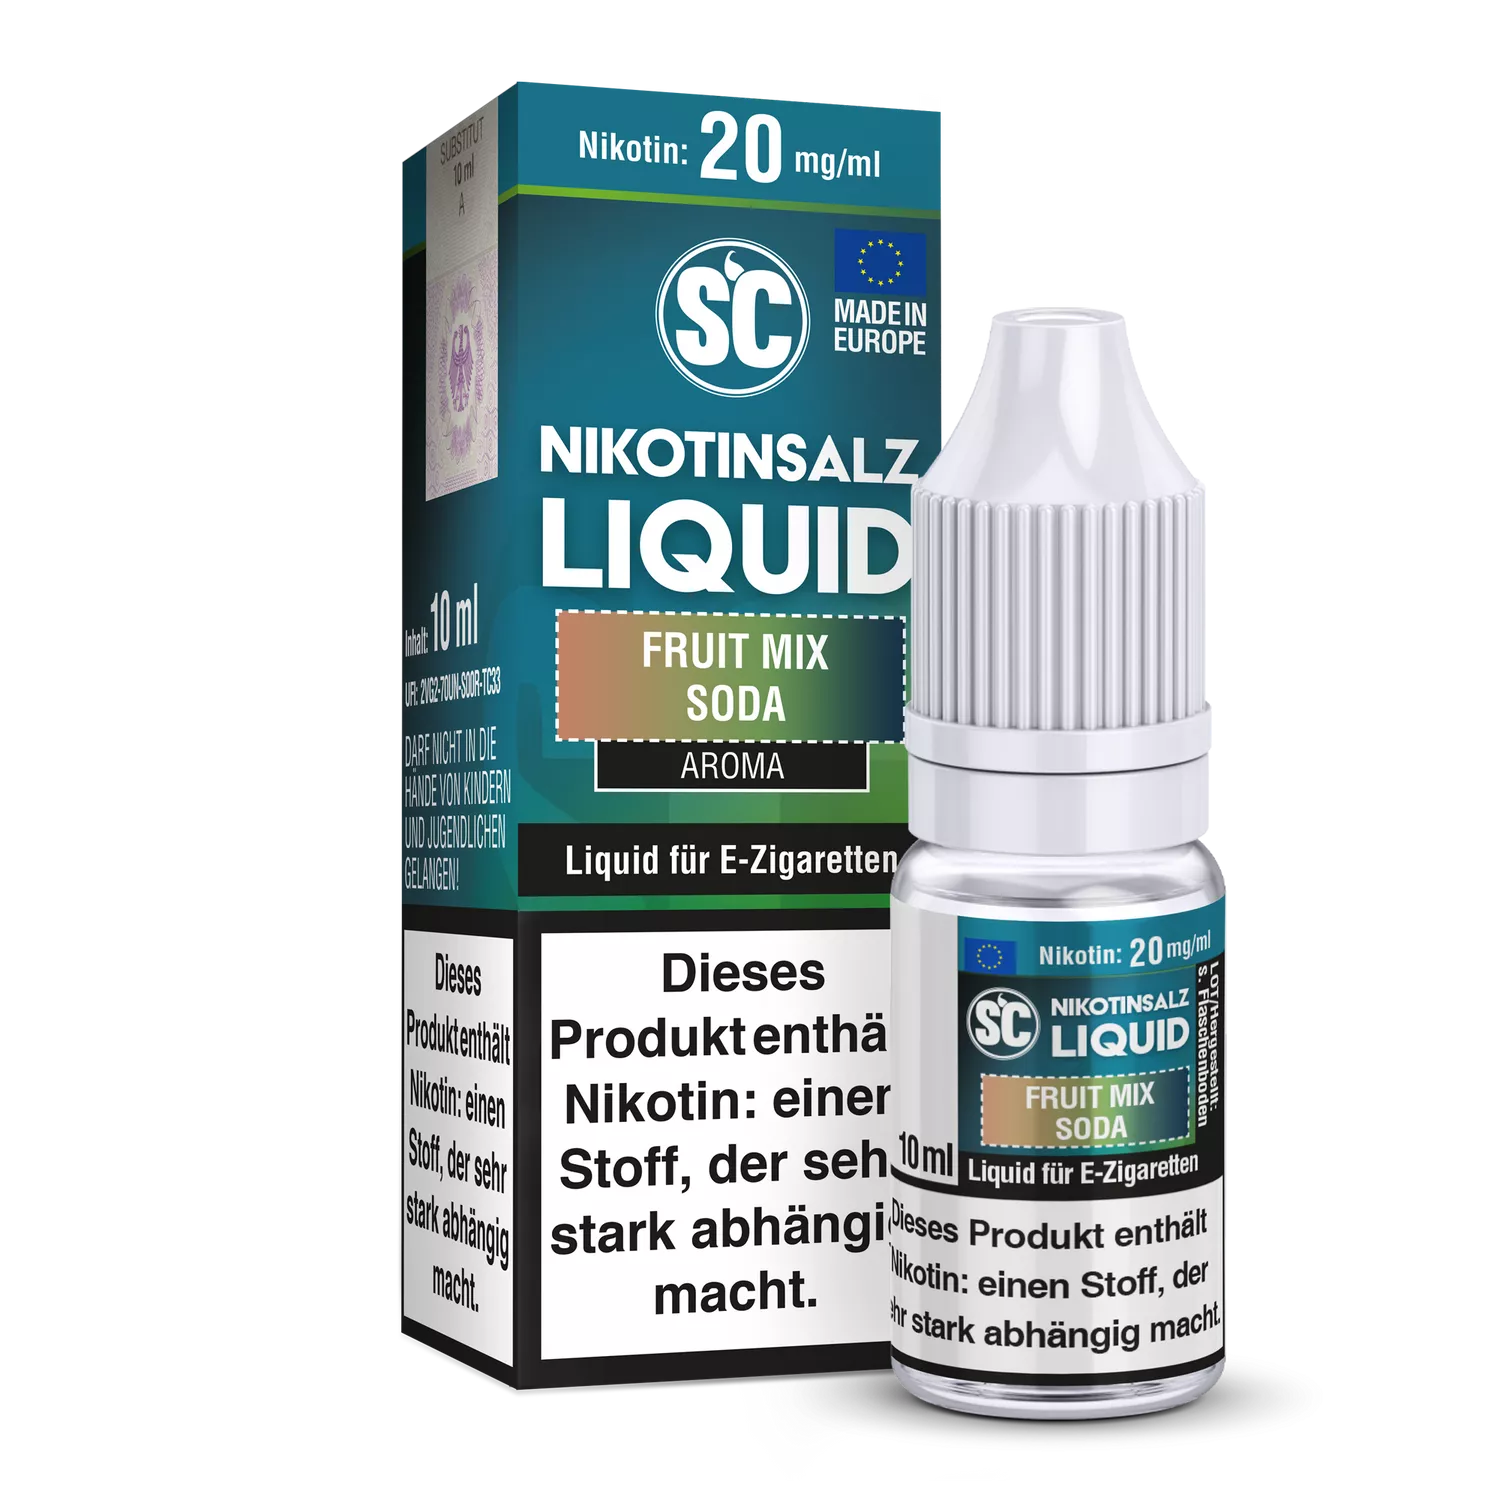 SC Nikotinsalz Liquid 20mg/ml - Fruit Mix Soda